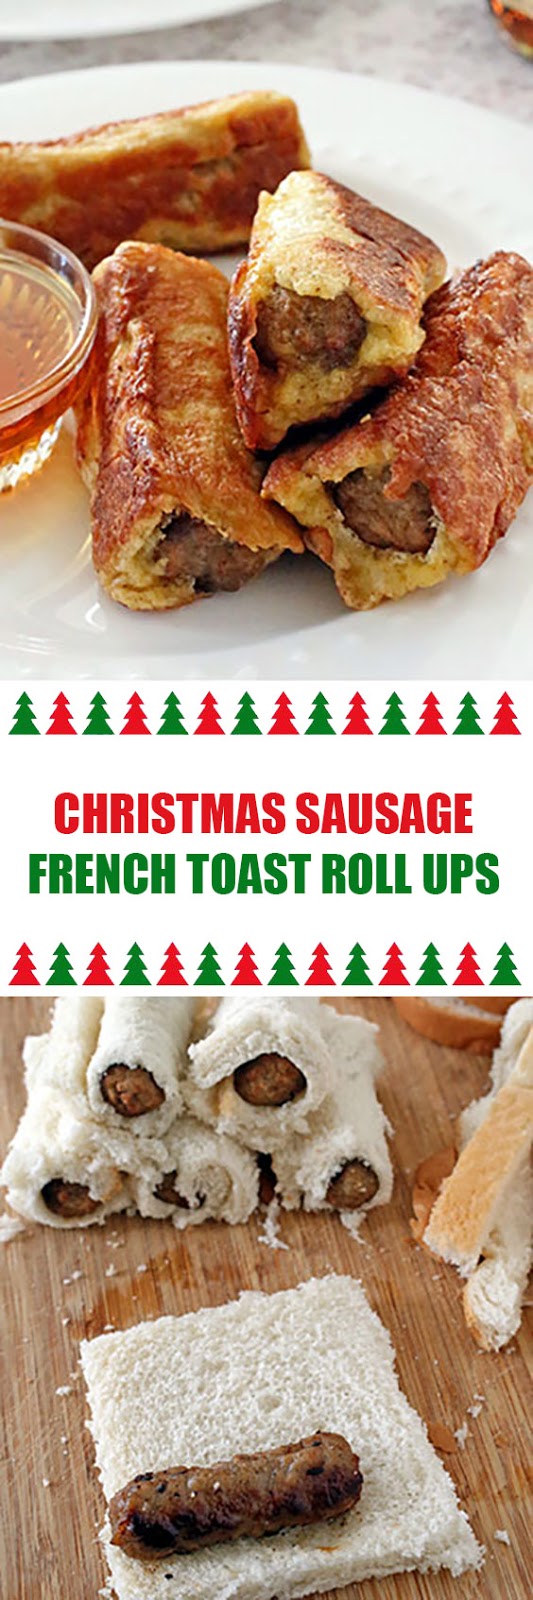 Christmas Sausage French Toast Roll Ups